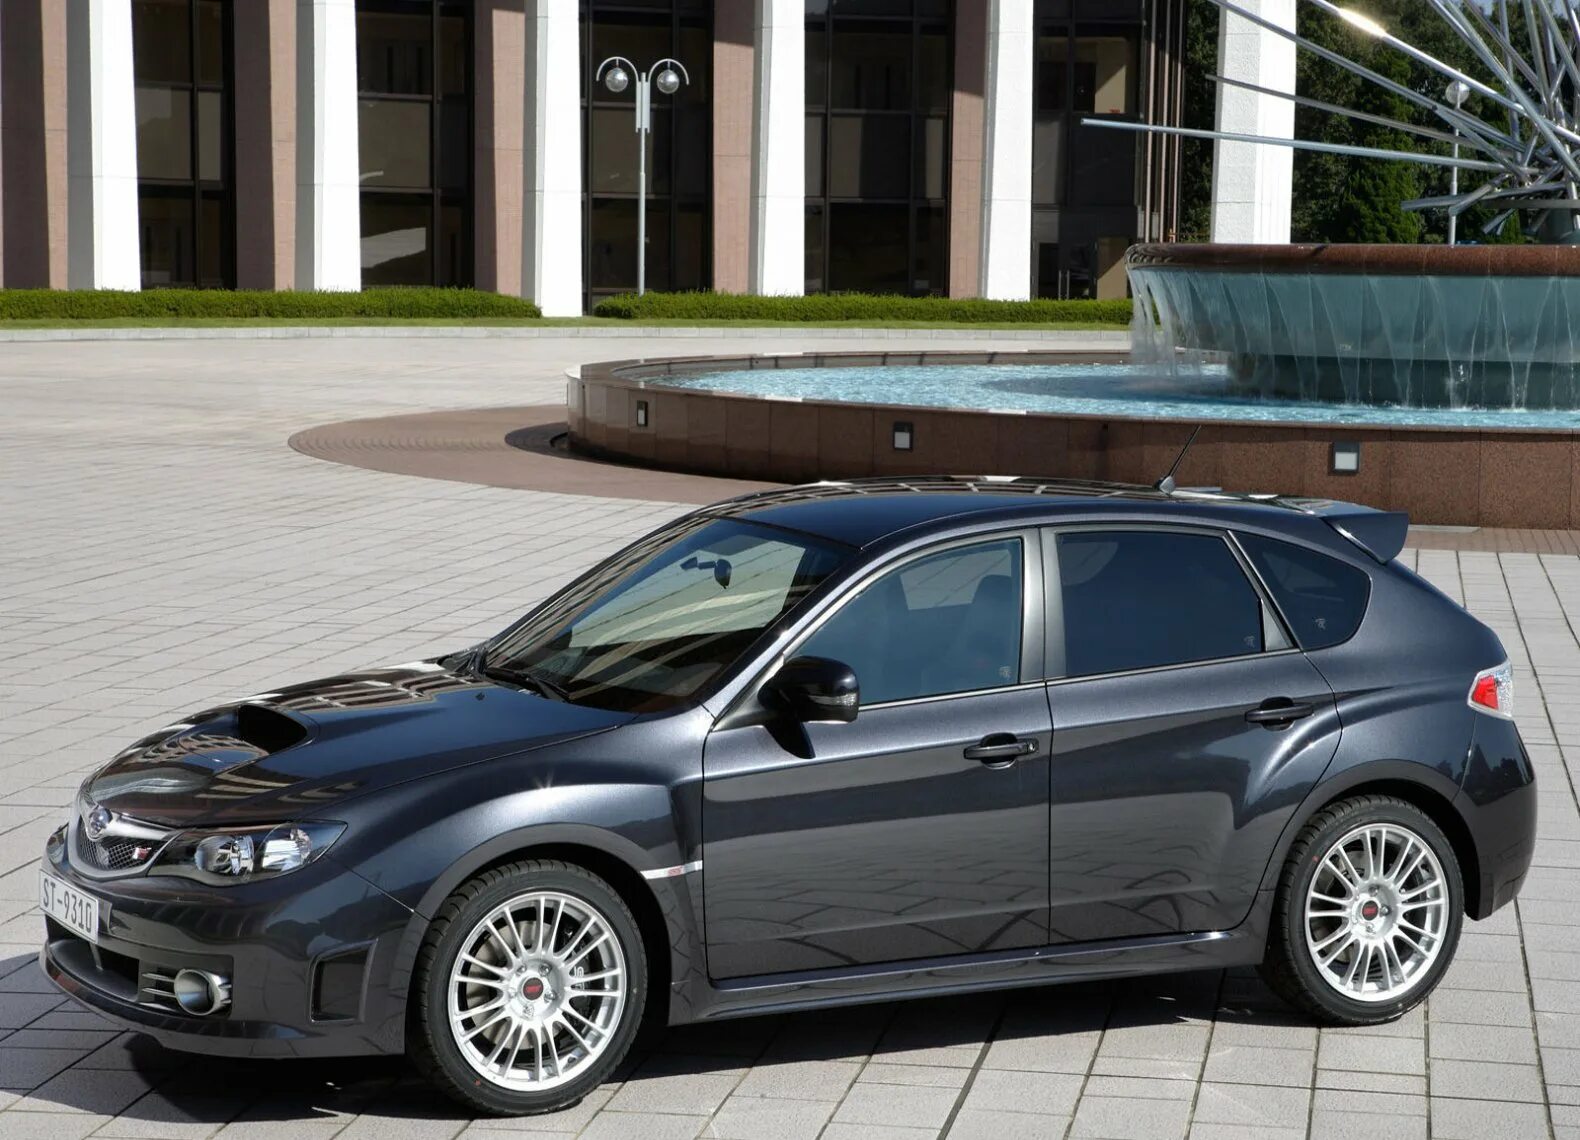 Wrx sti 2008. Subaru Impreza WRX STI 2008. Subaru Impreza STI 2008. Subaru WRX STI 2008 хэтчбек. Subaru Impreza WRX 2008.